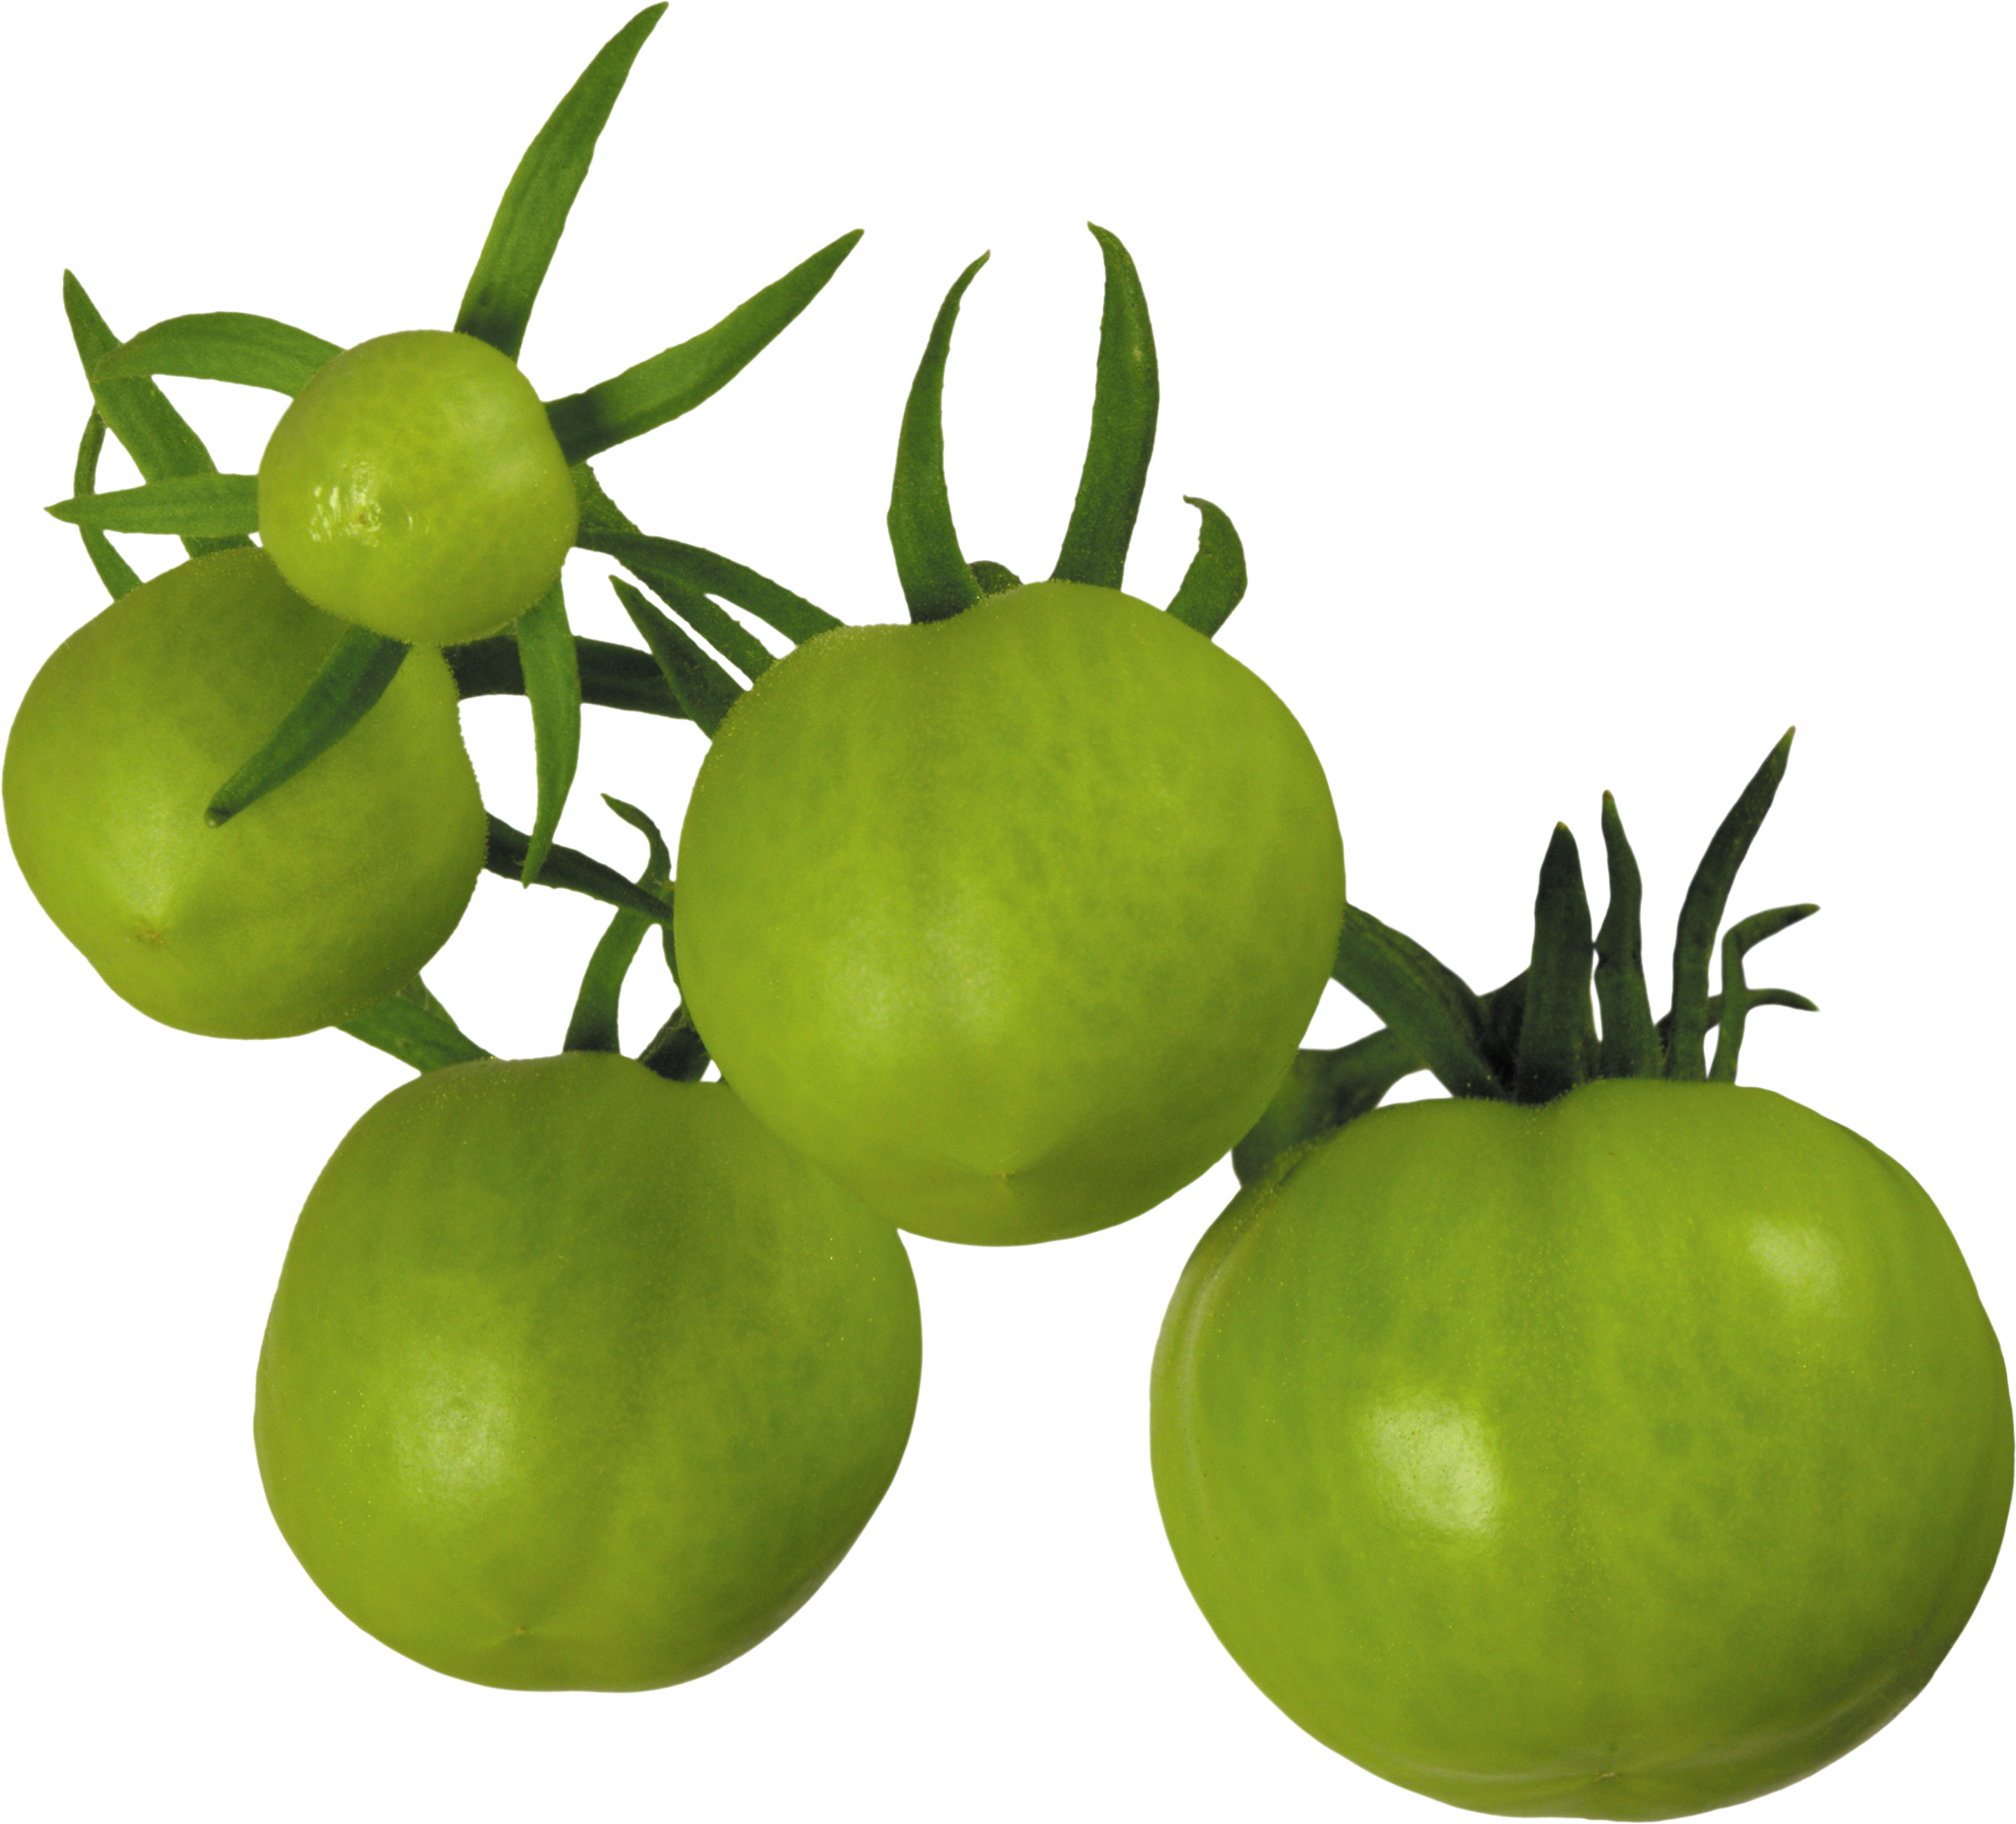 Ein paar grüne Tomaten